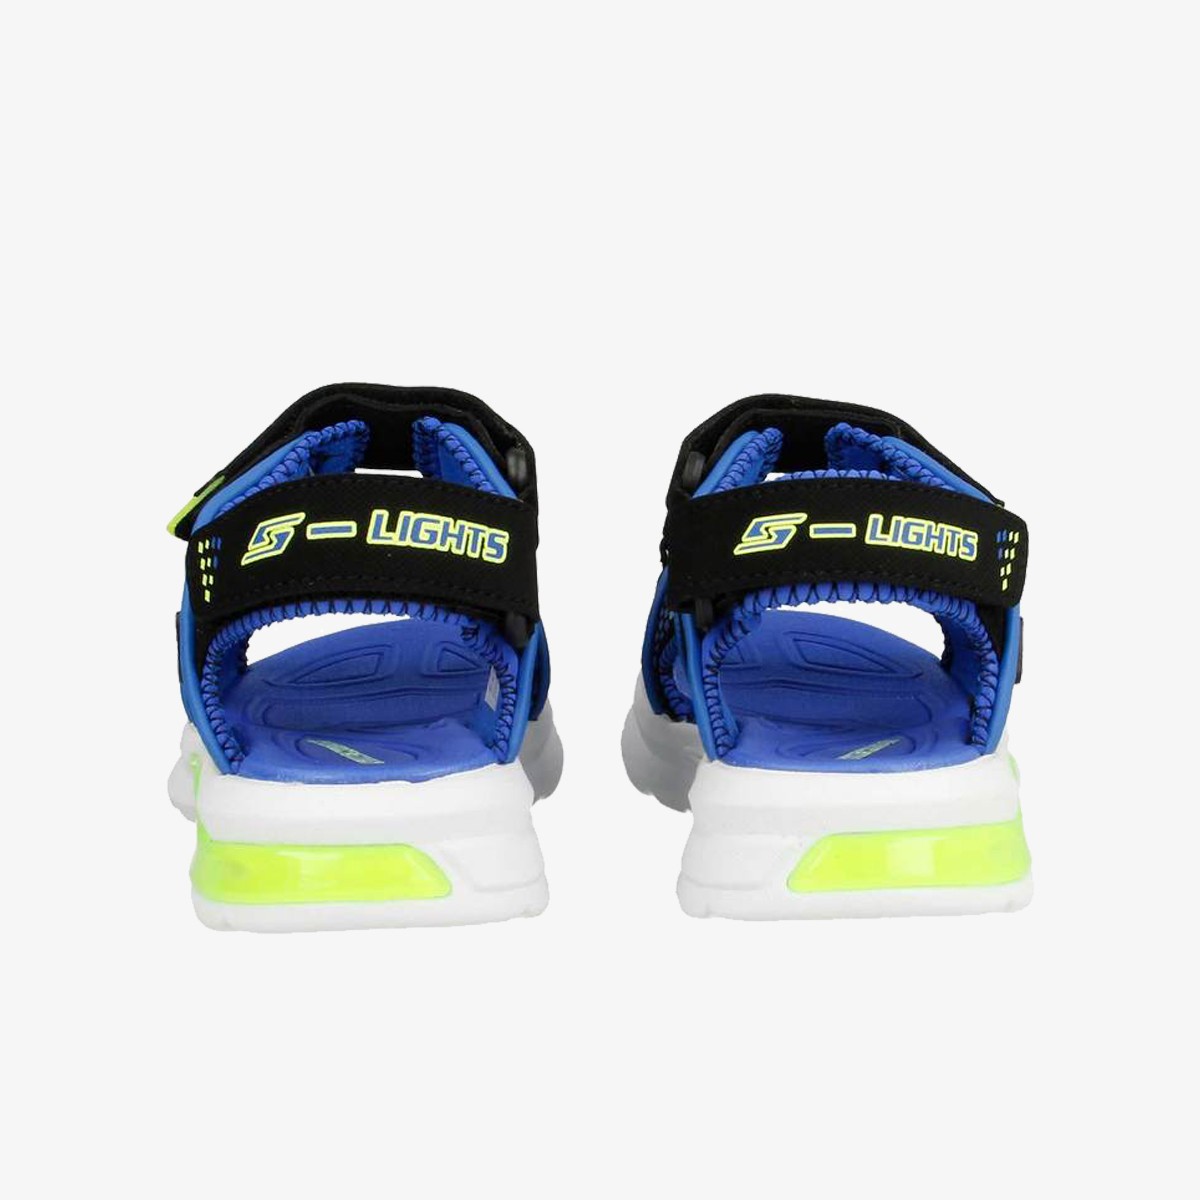 Skechers E-II Sandal 